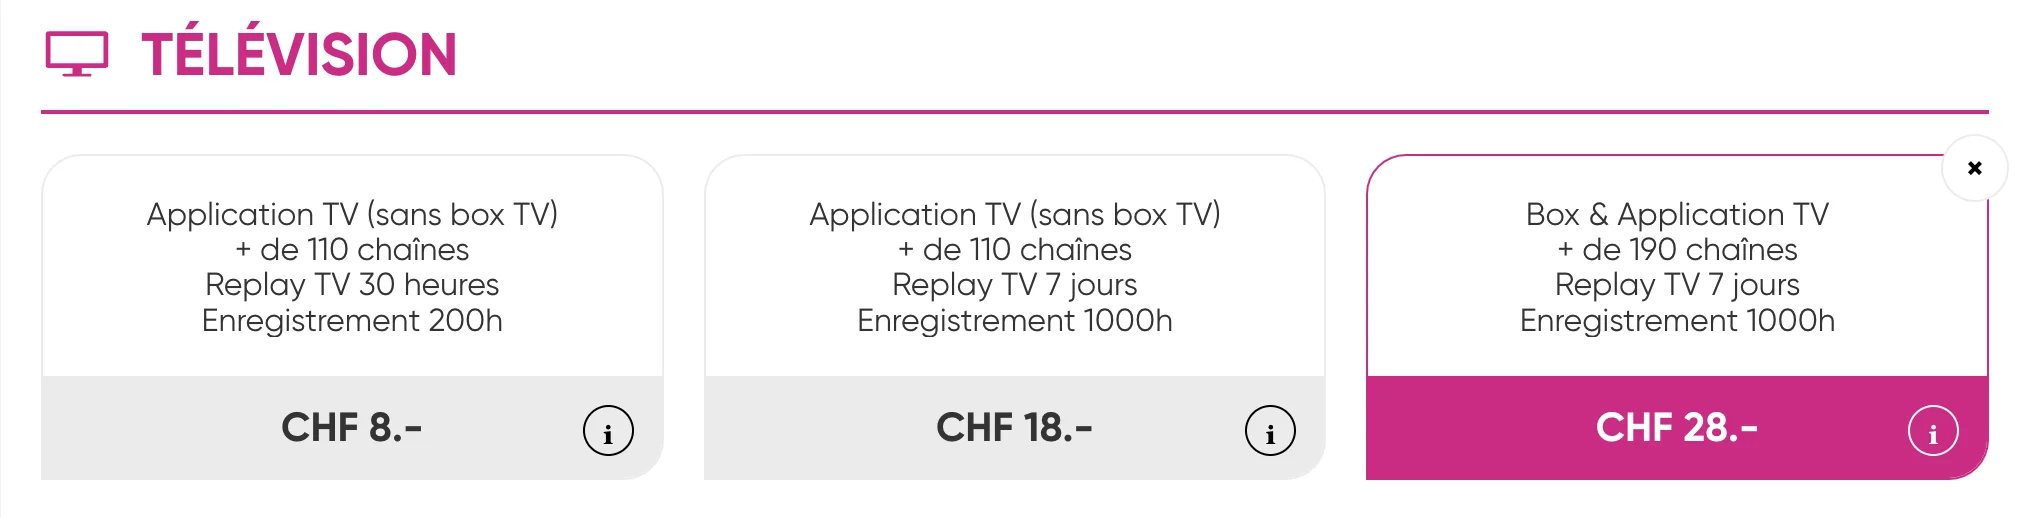 television-netplus-ch